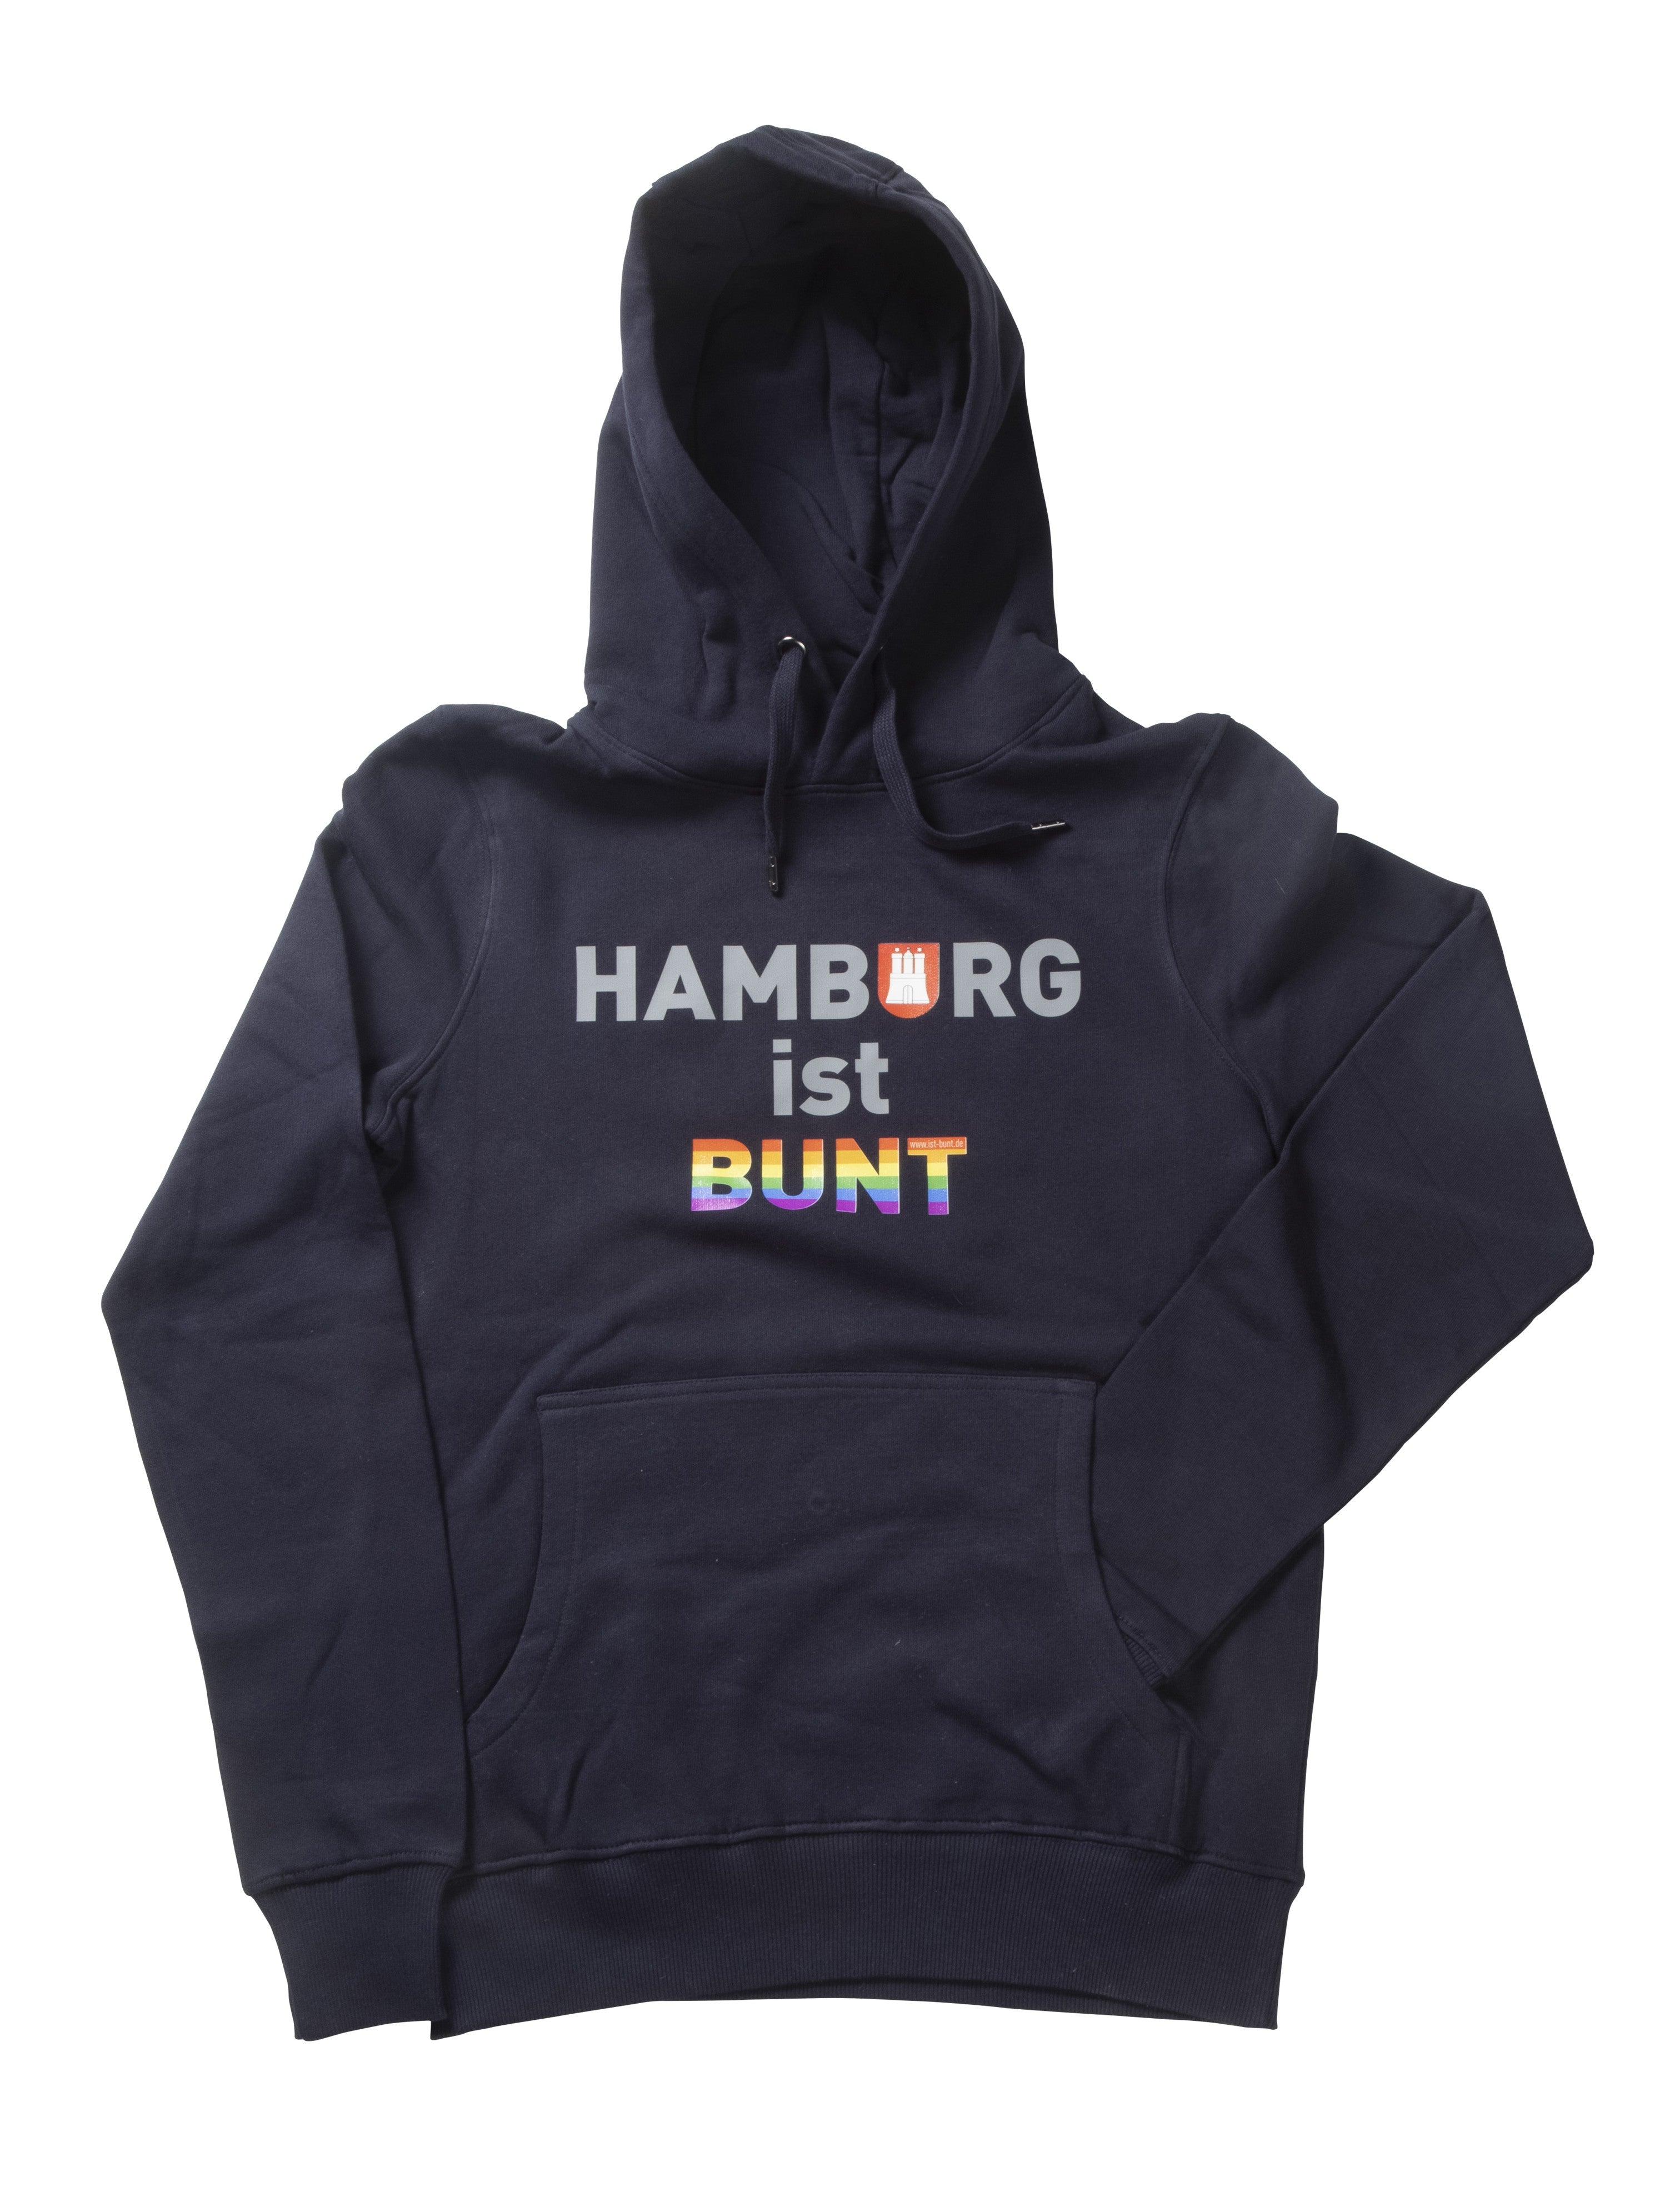 Hamburg ist Bunt - Hoodie